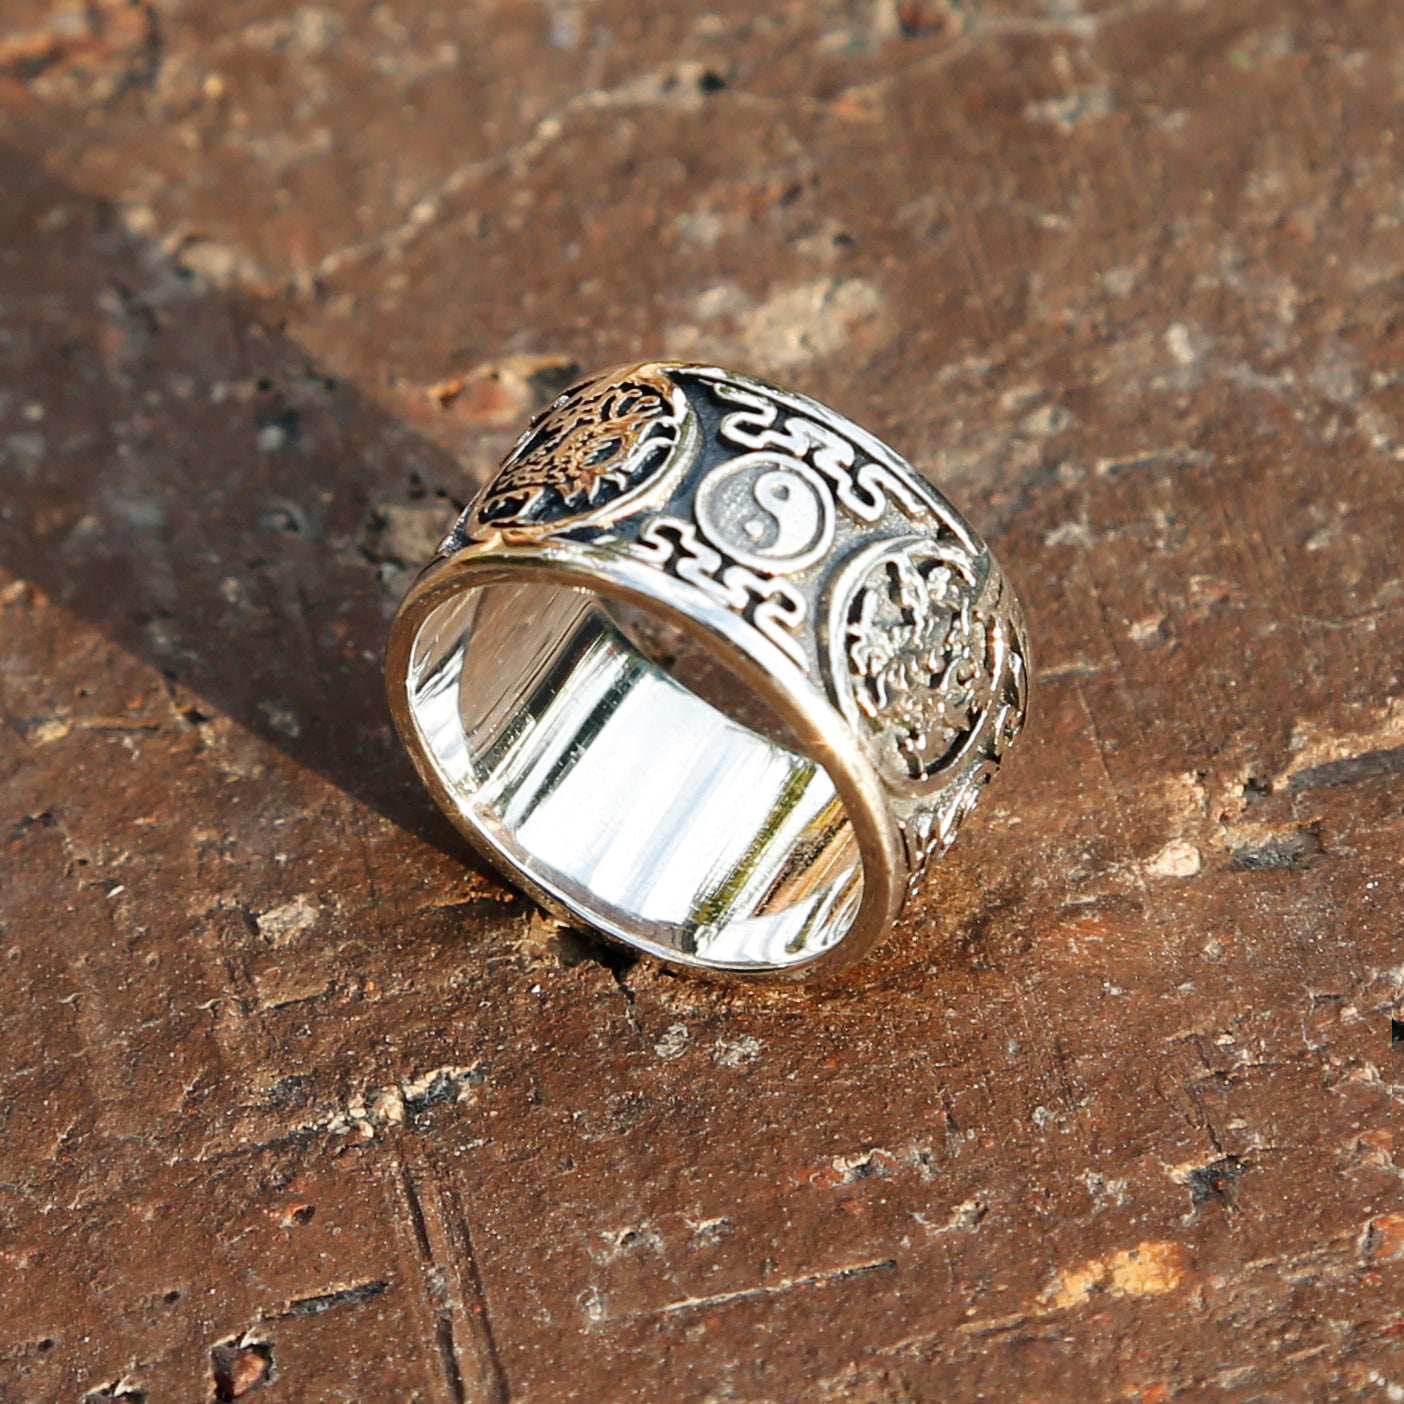 Silver Men'S Diamond Ring - 87629RHADSSSLRG – Rodgers The Diamond Store